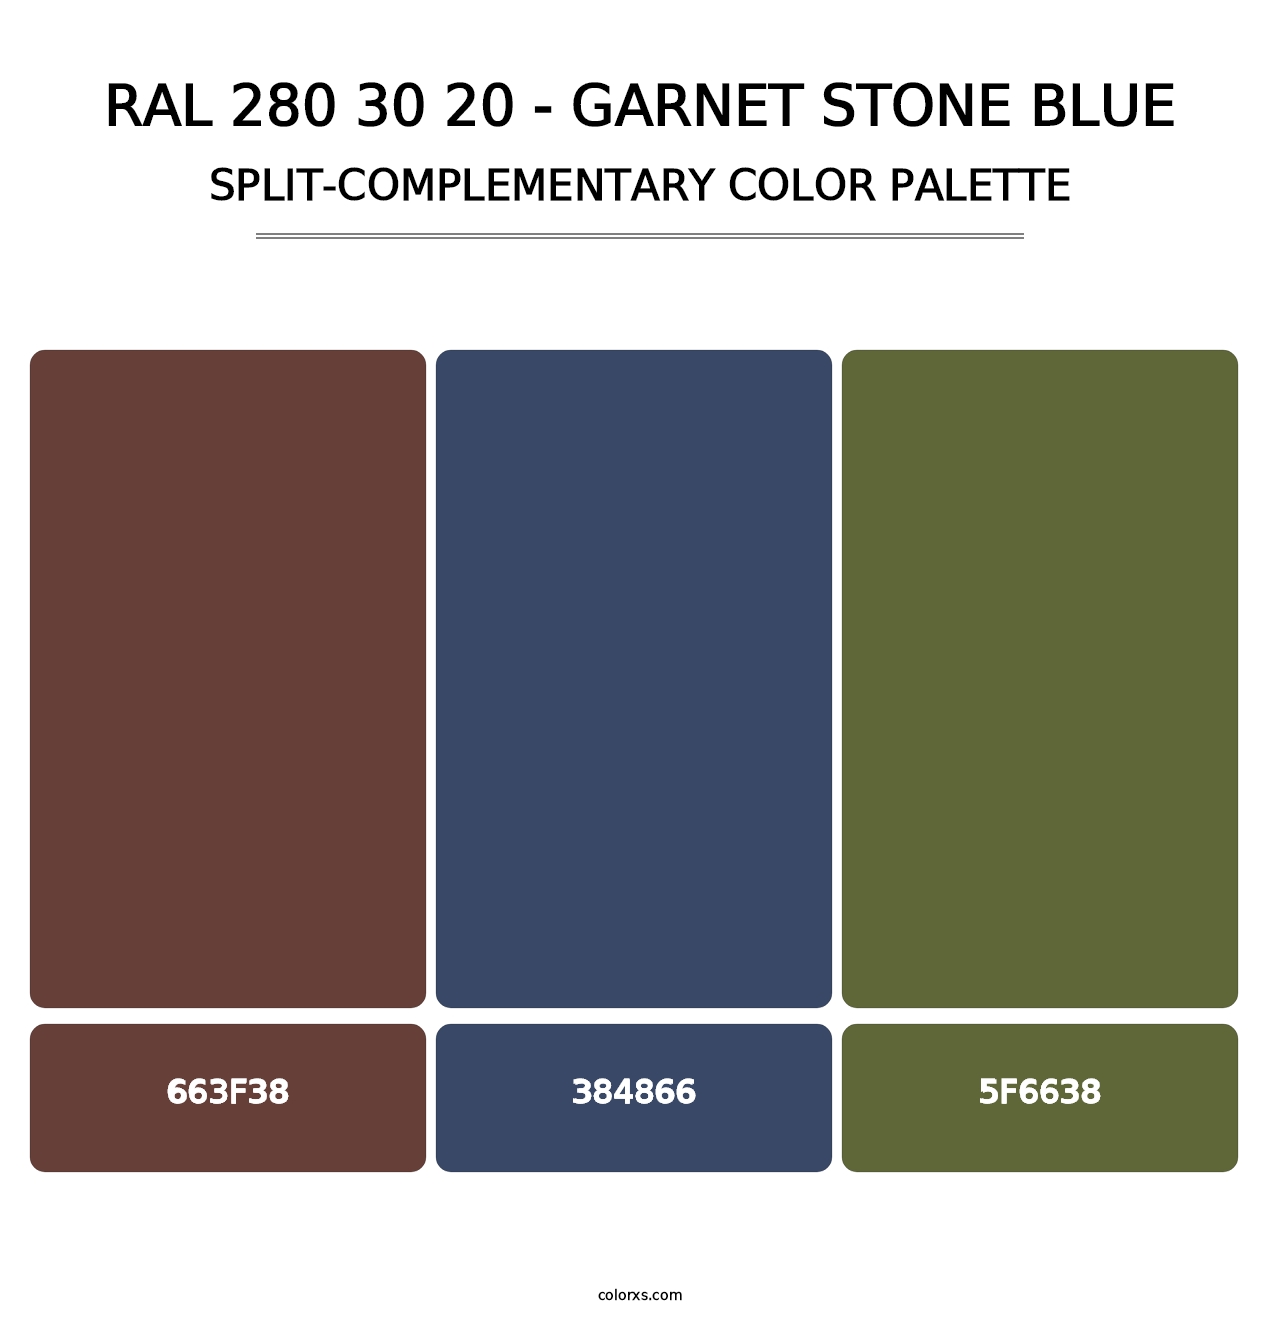 RAL 280 30 20 - Garnet Stone Blue - Split-Complementary Color Palette